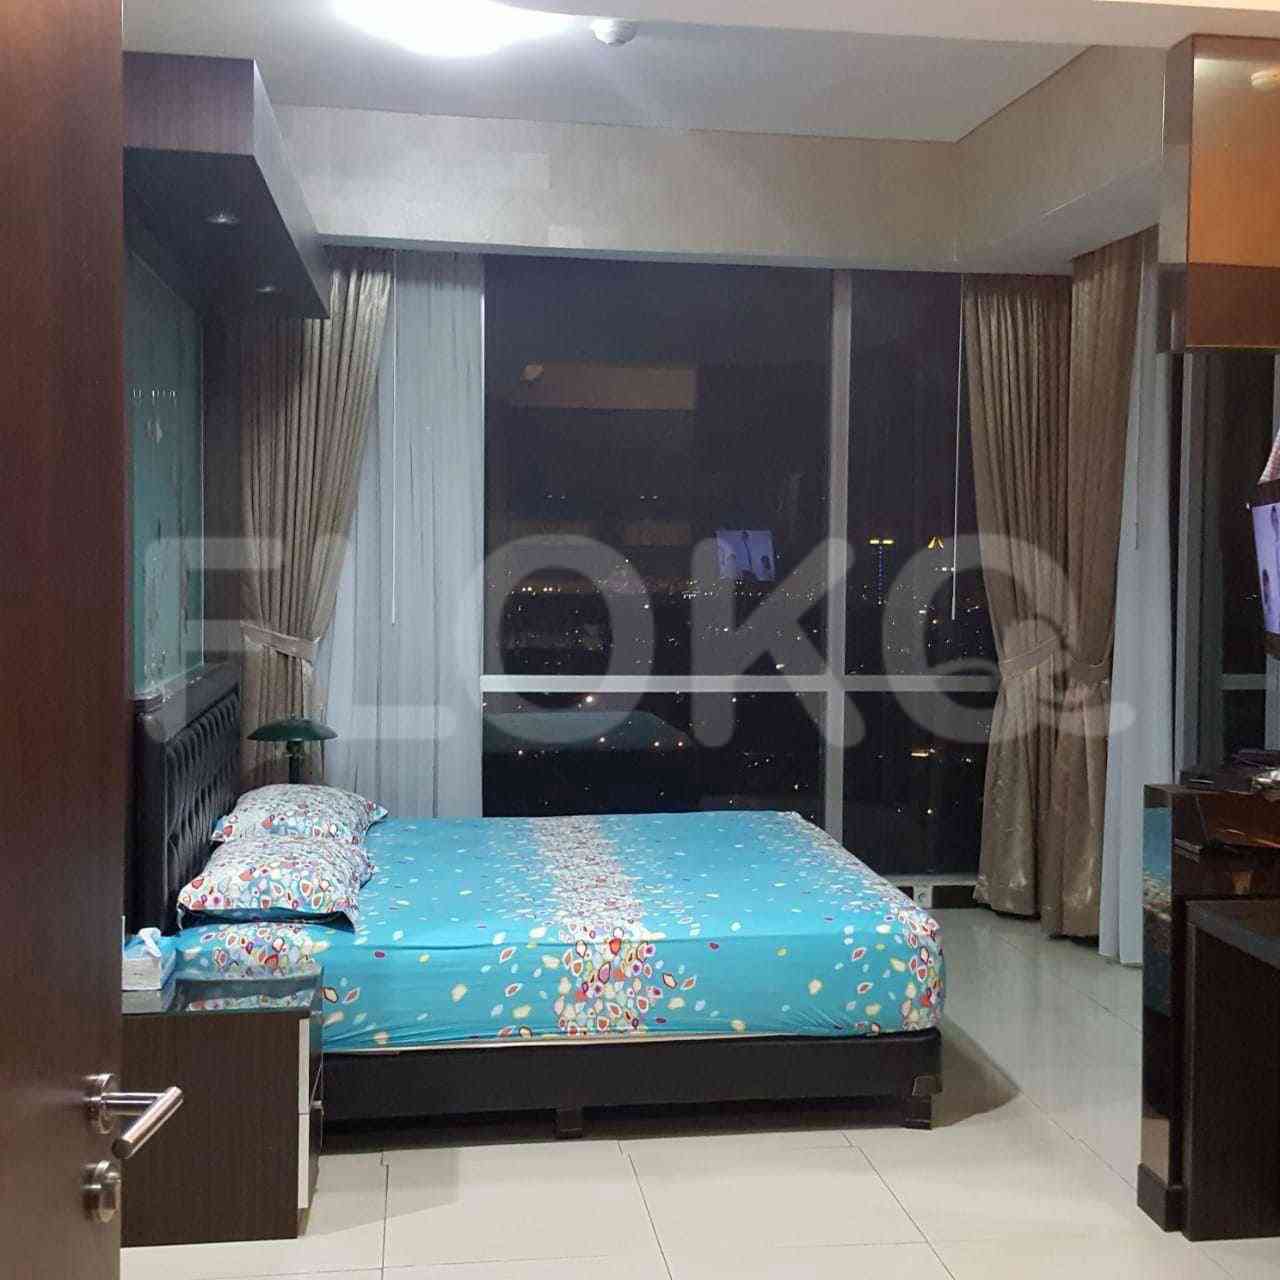 3 Bedroom on 15th Floor for Rent in Kemang Village Residence - fke0d5 2